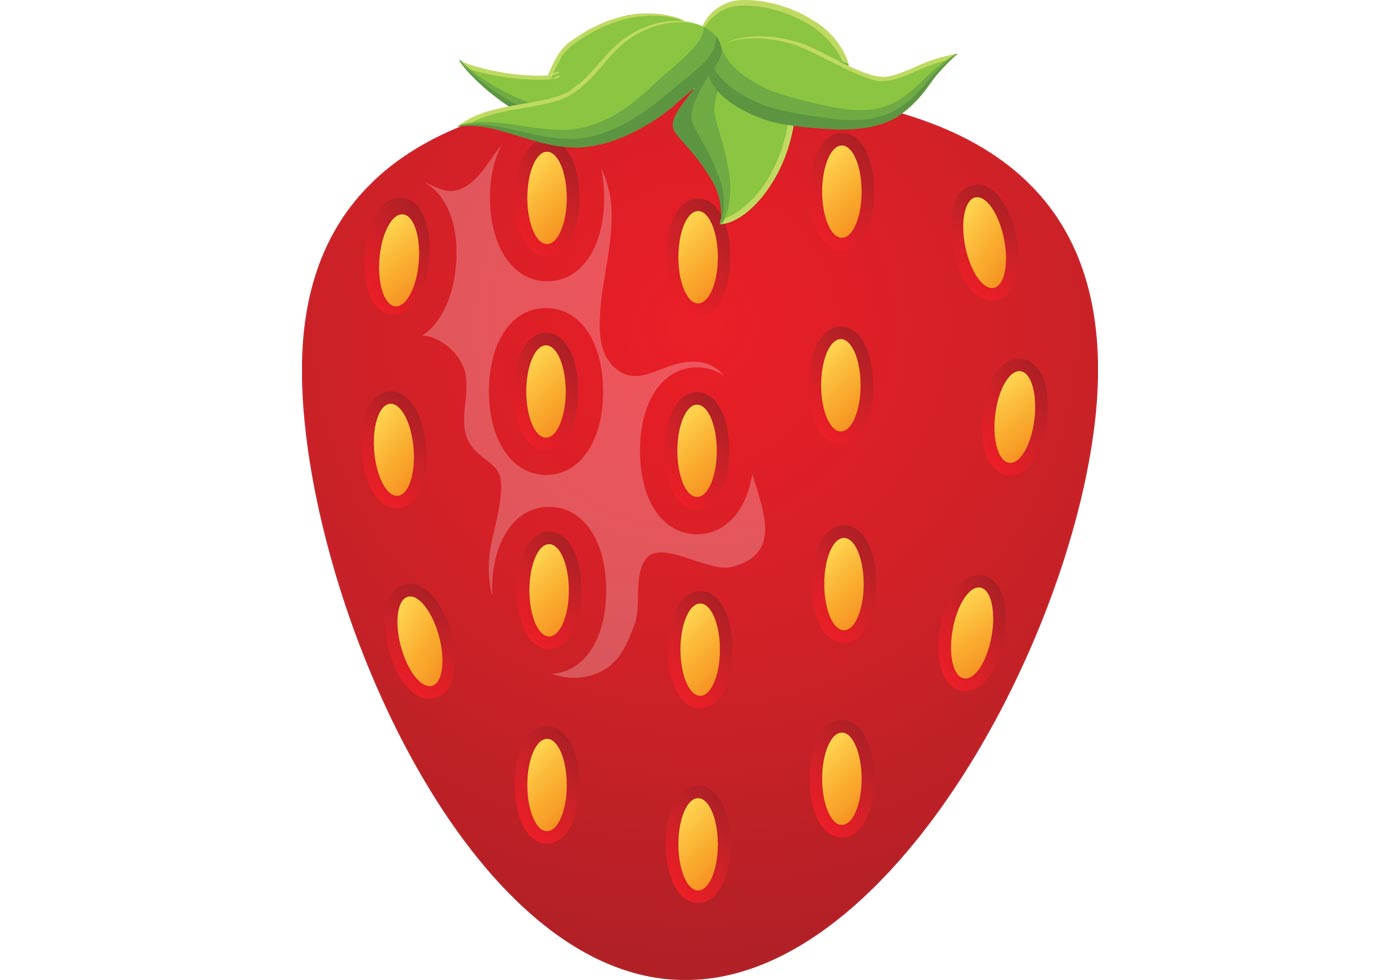 Strawberry Free Vector Art - (3532 Free Downloads)